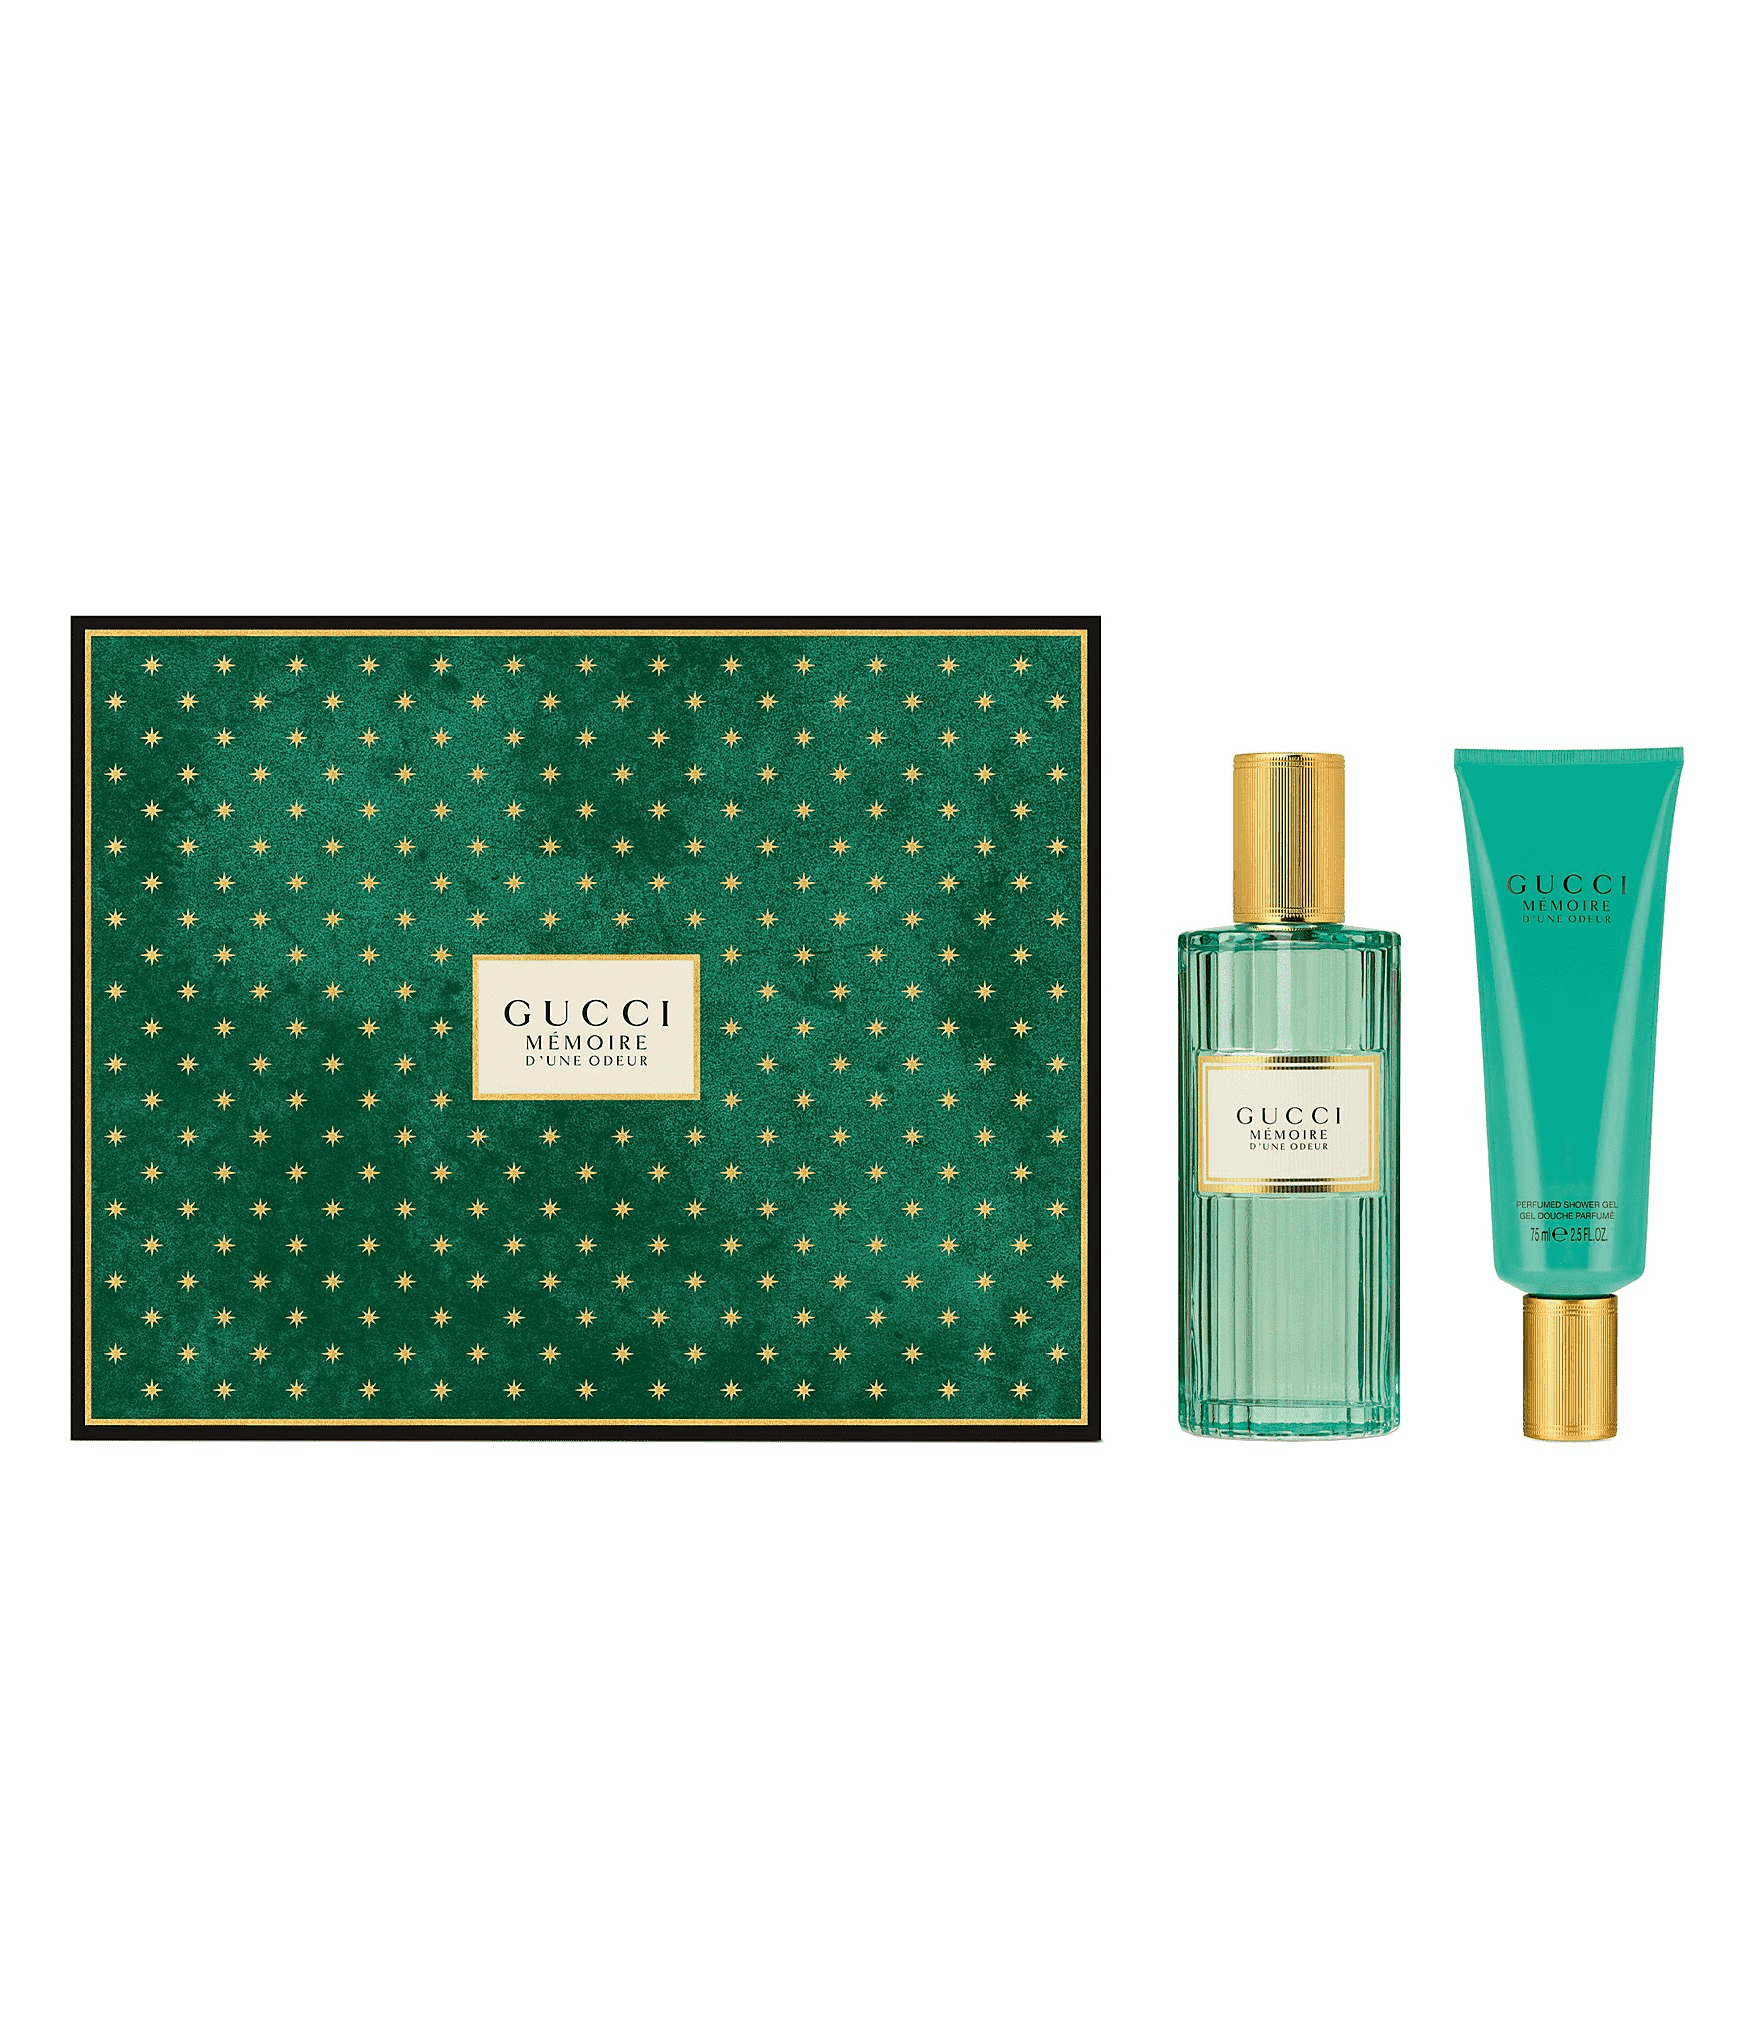 gucci perfume gift sets